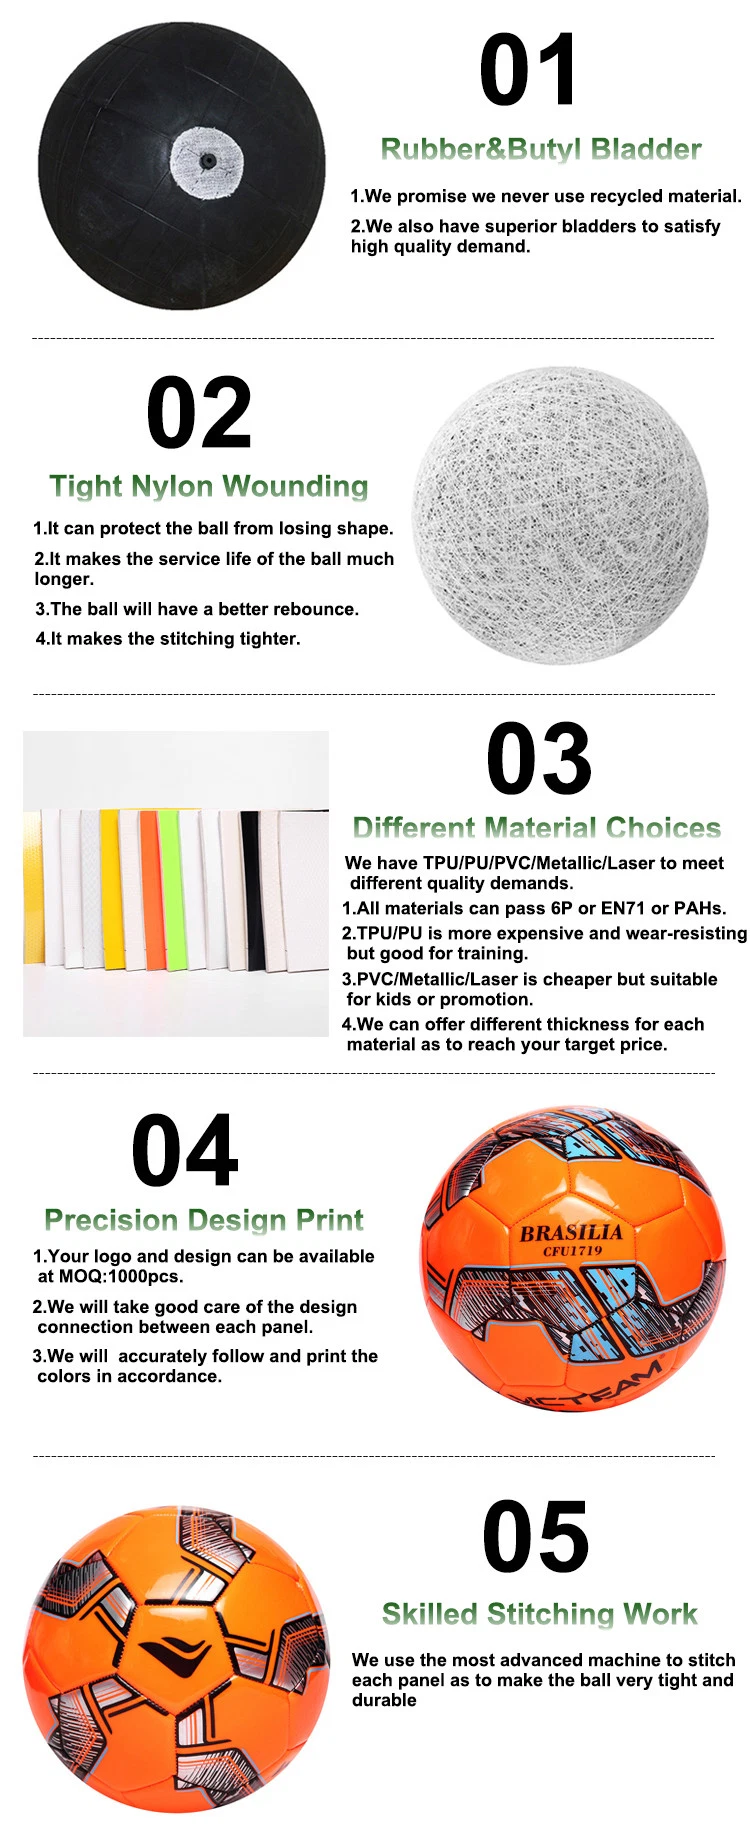 Official Size 5 4 3 Custom Print Drill Soccer Ball